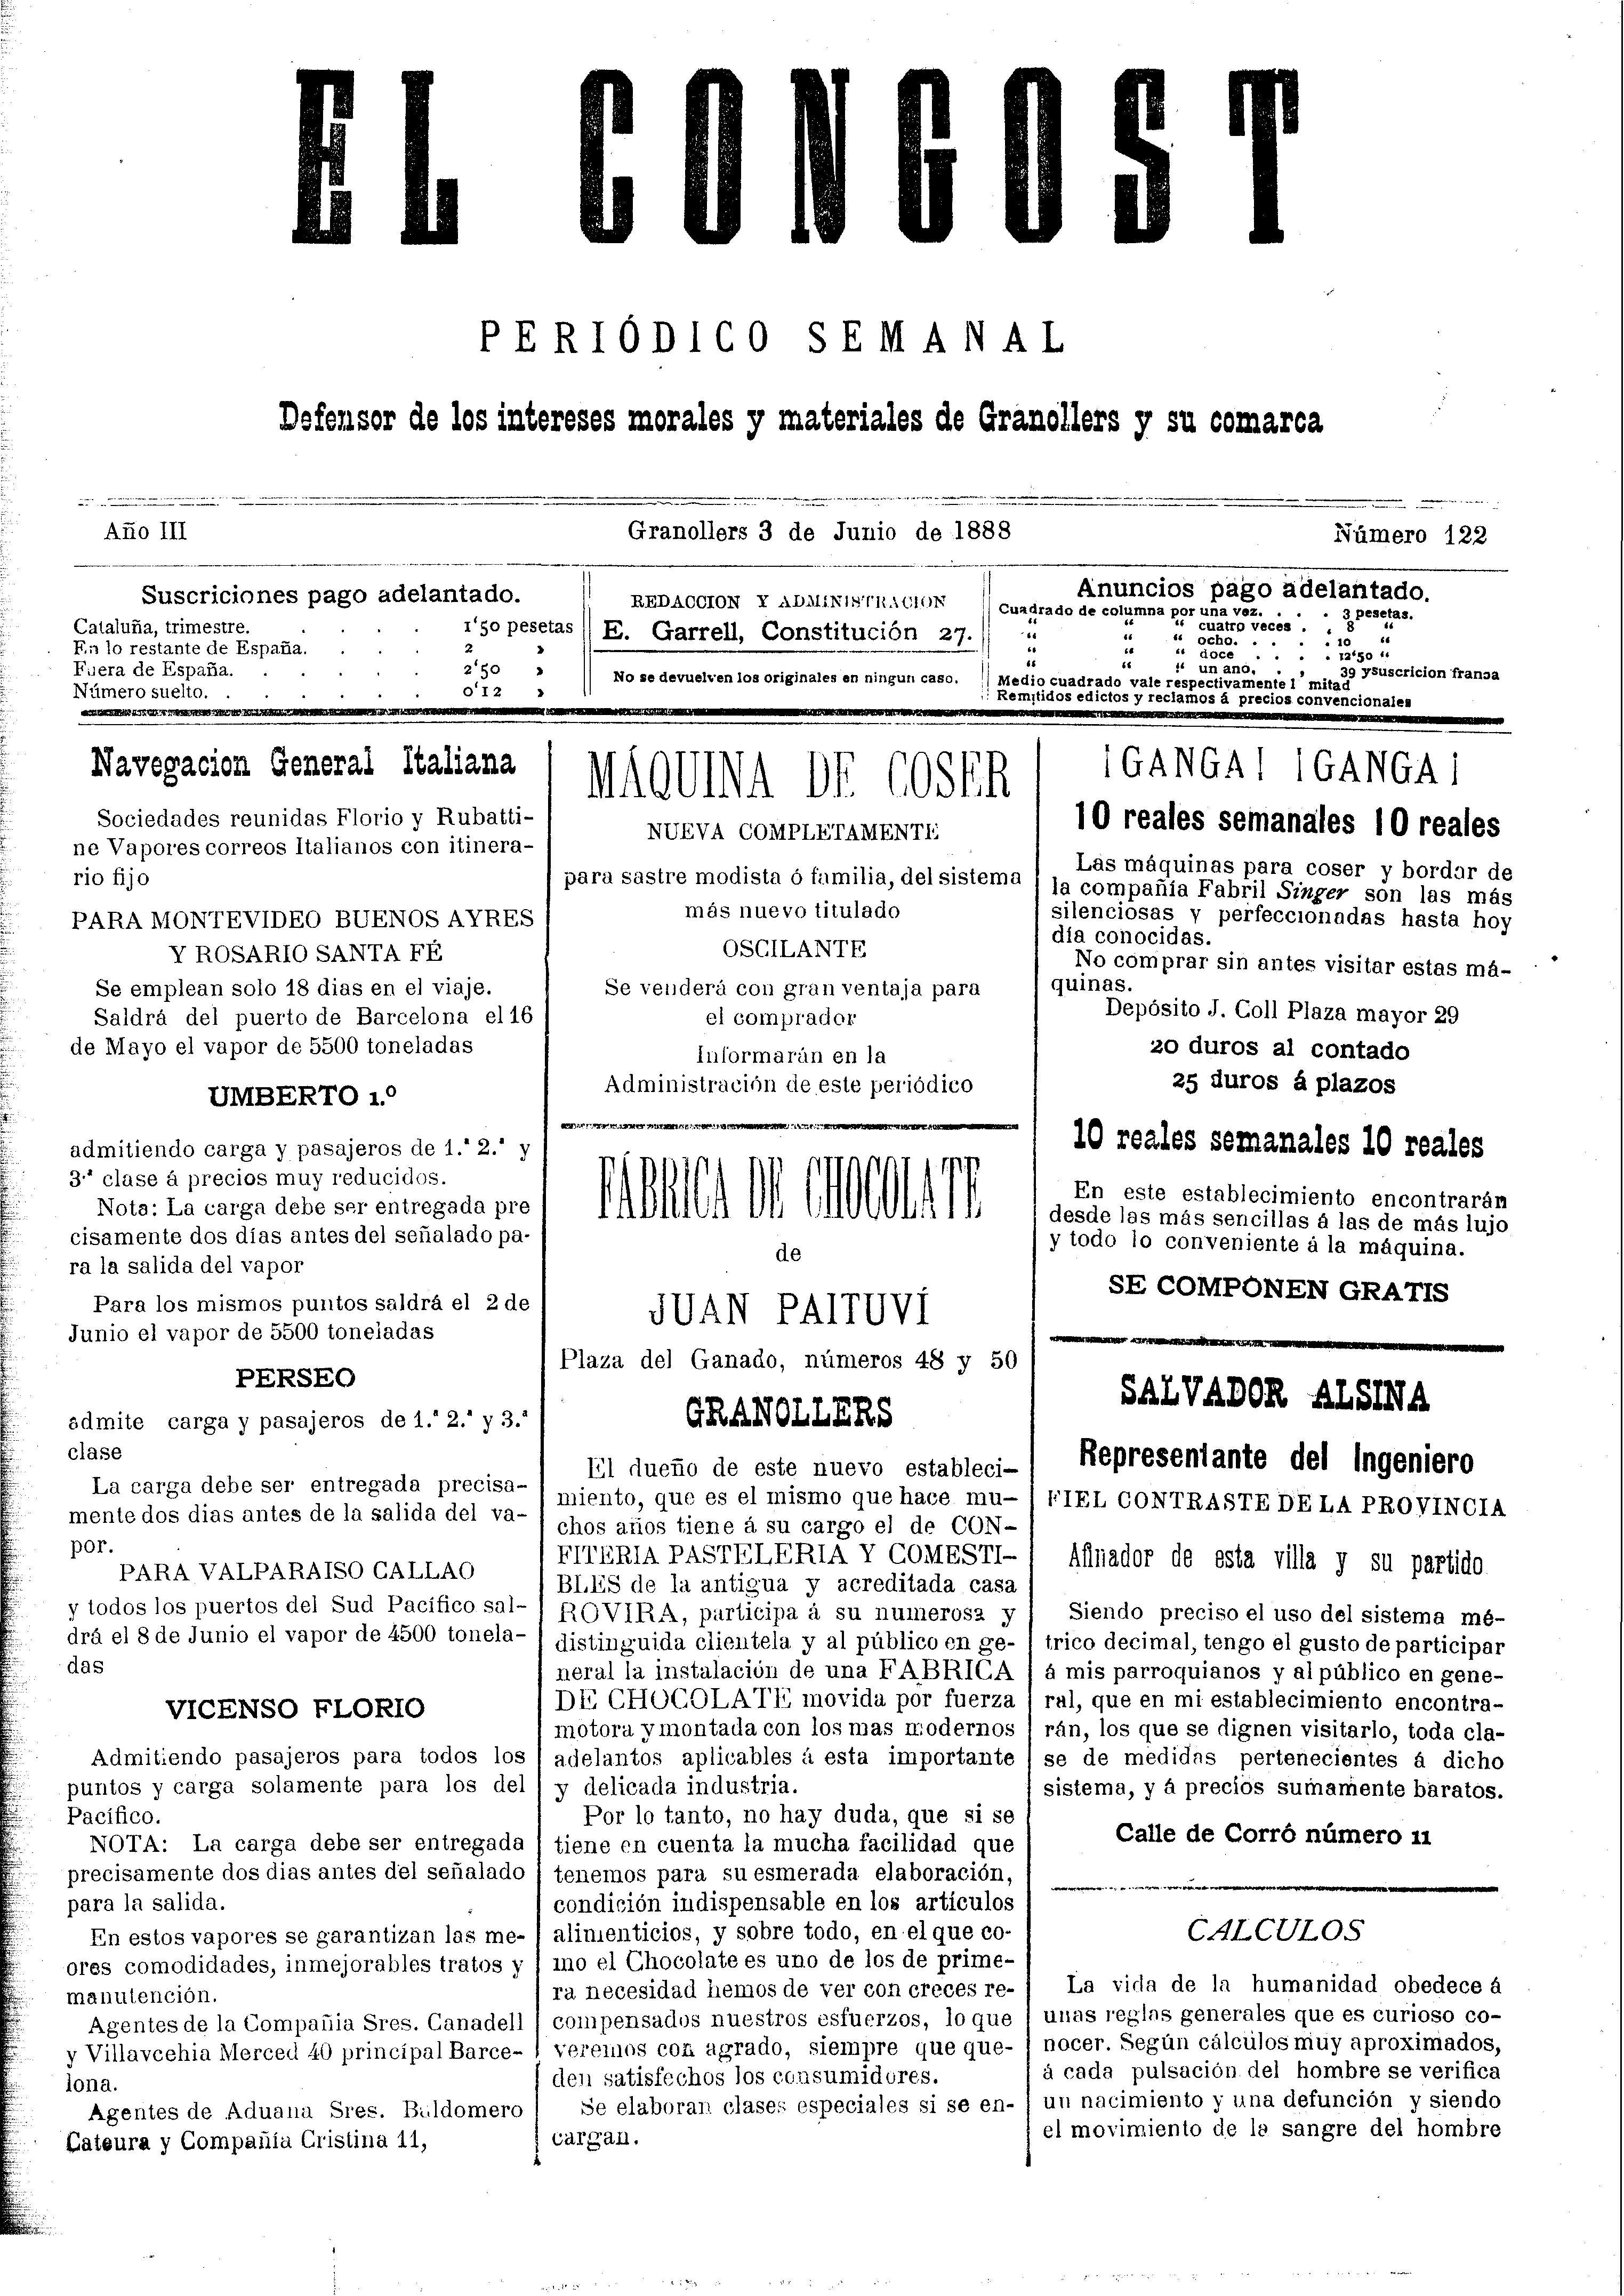 El Congost, 3/6/1888 [Exemplar]